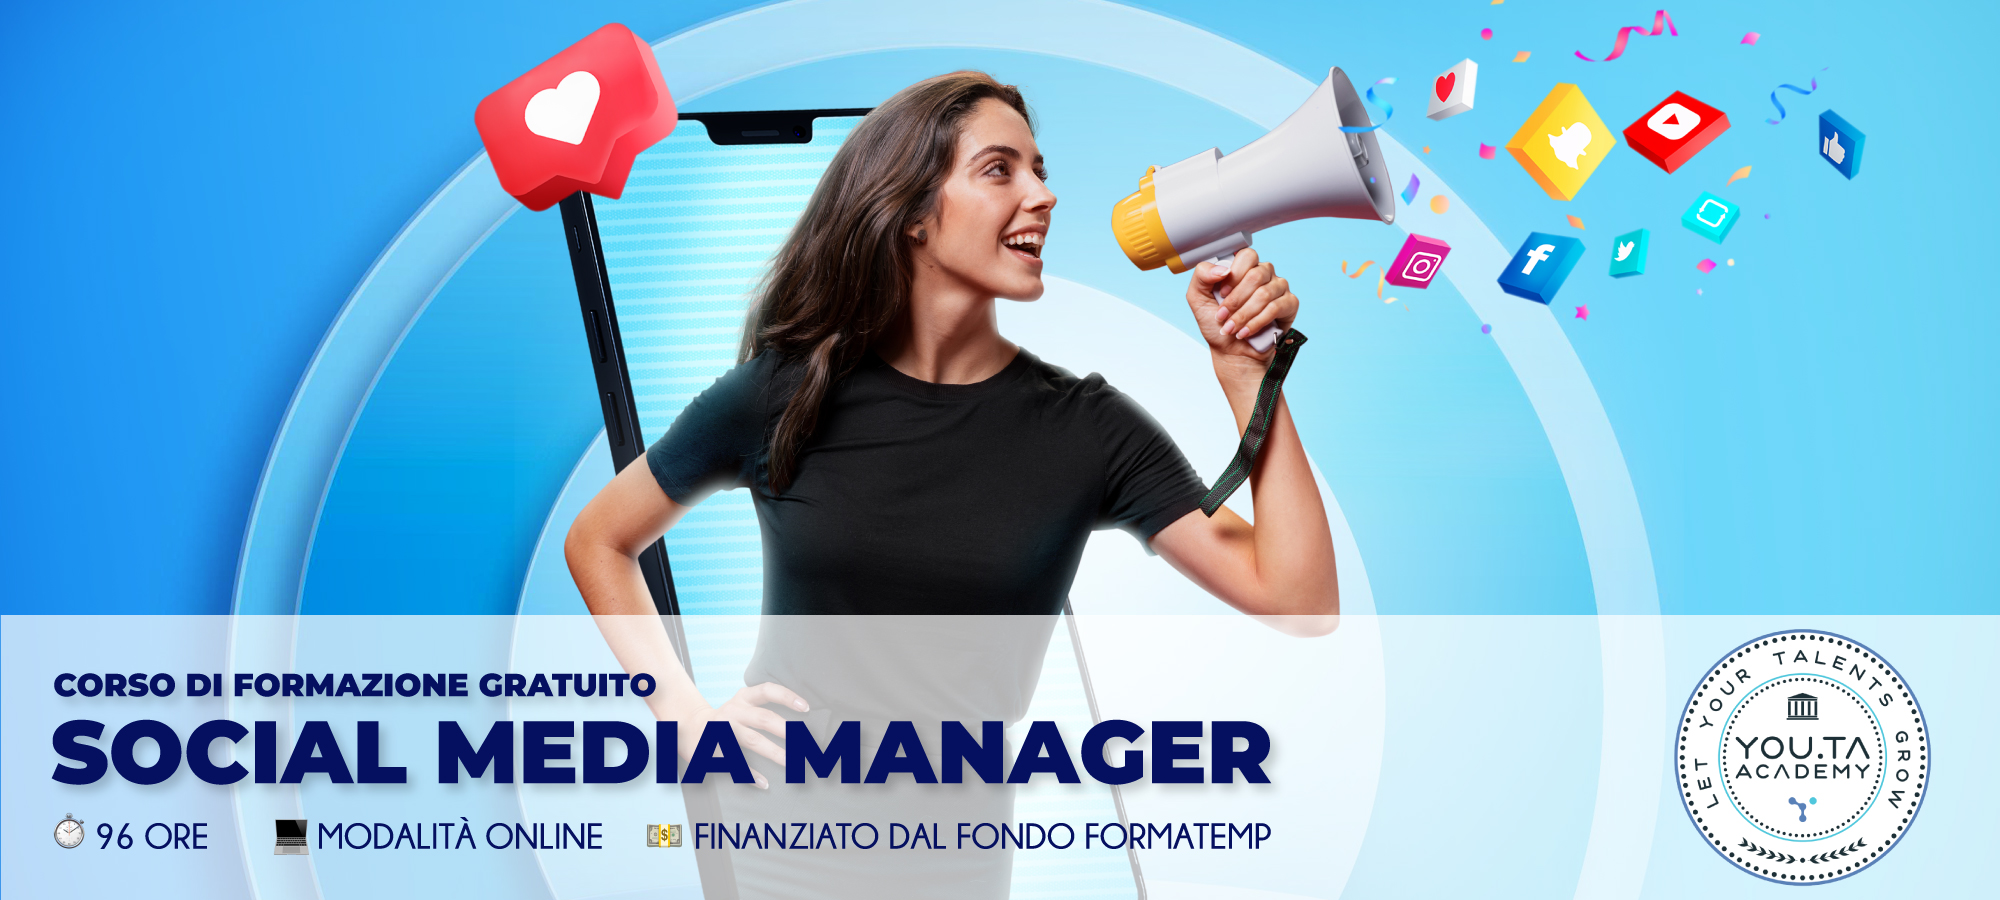 corso-gratuito-social-media-manager